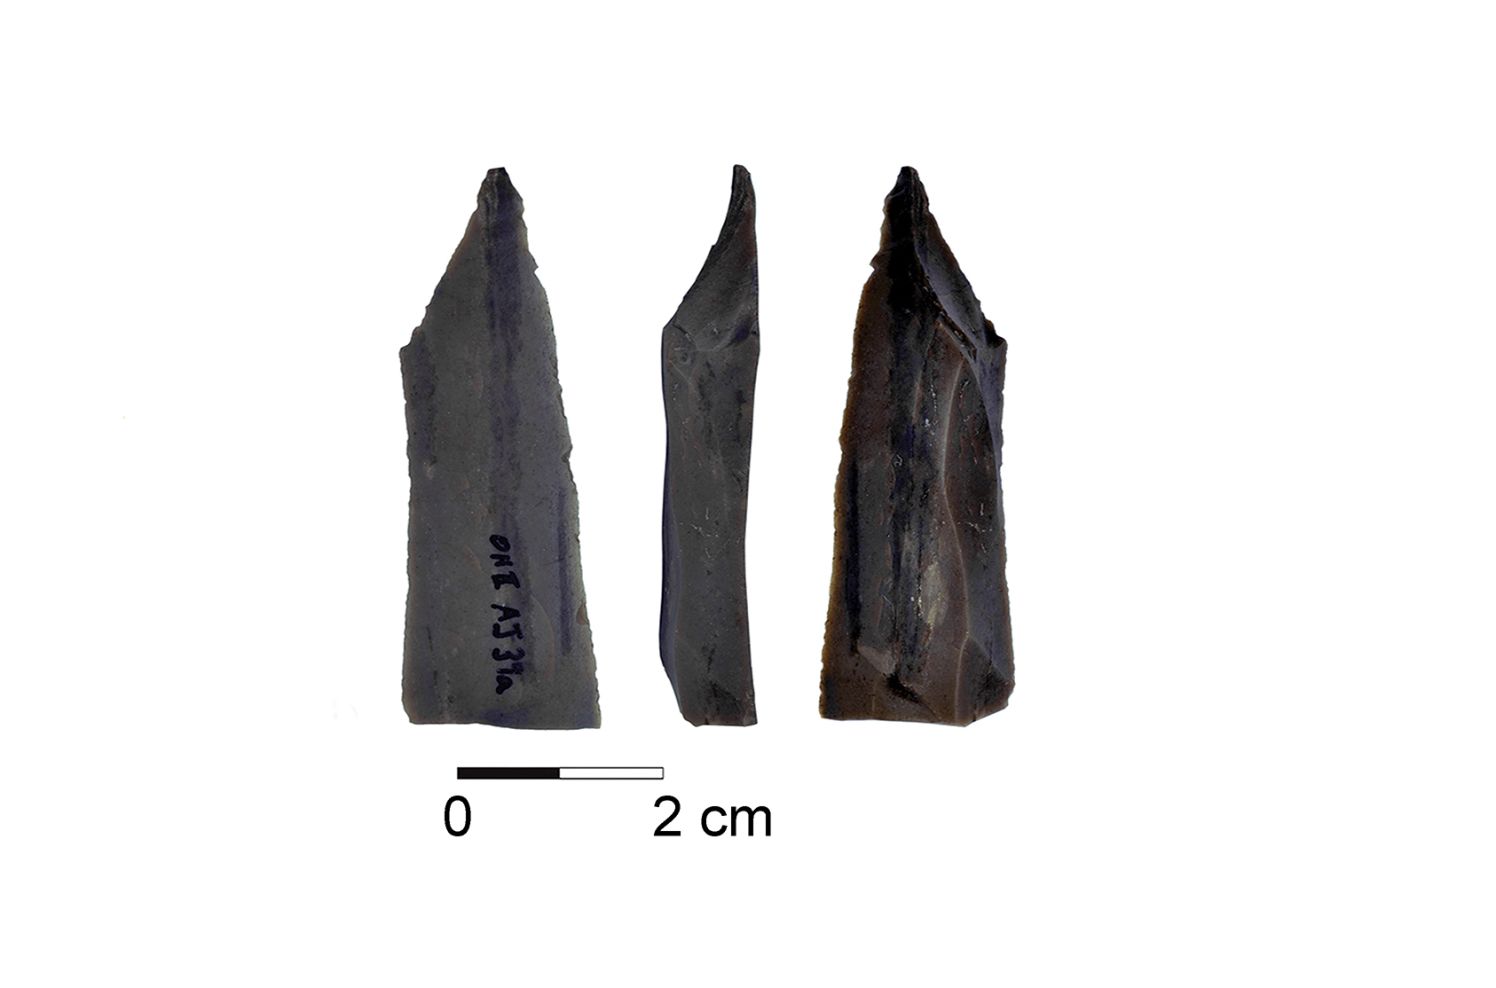 Ohalo II 
Flint sickle-blade from Ohalo II, dating to about 23,000 years agoCredit: Iris Groman-Yaroslavski and Dani Nadel